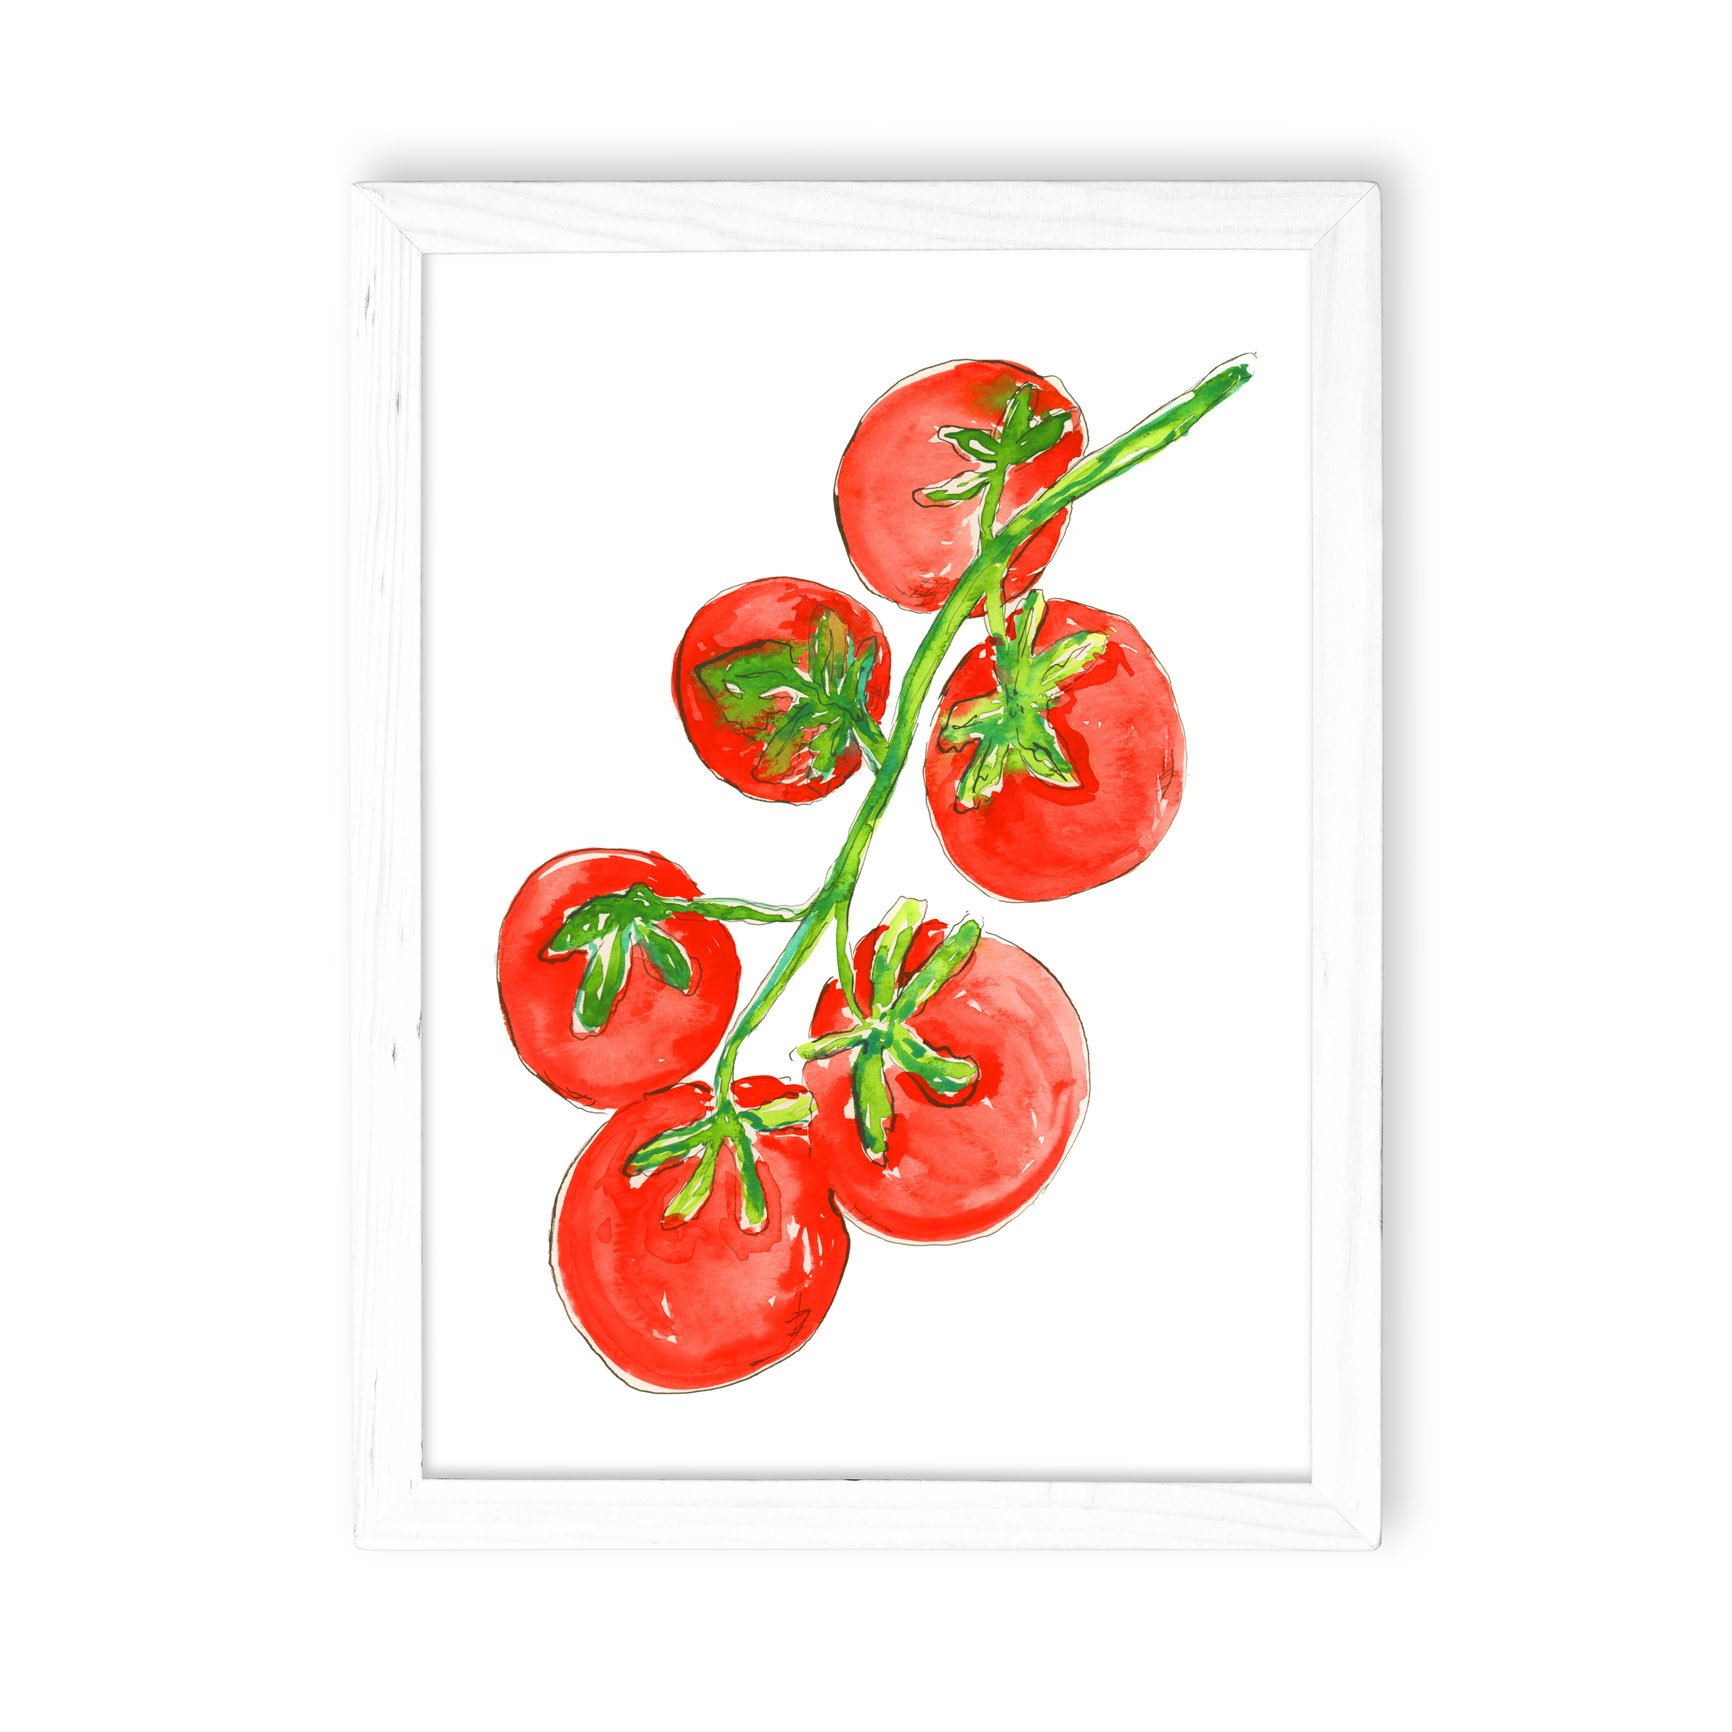 Tomatoe Vine.jpg